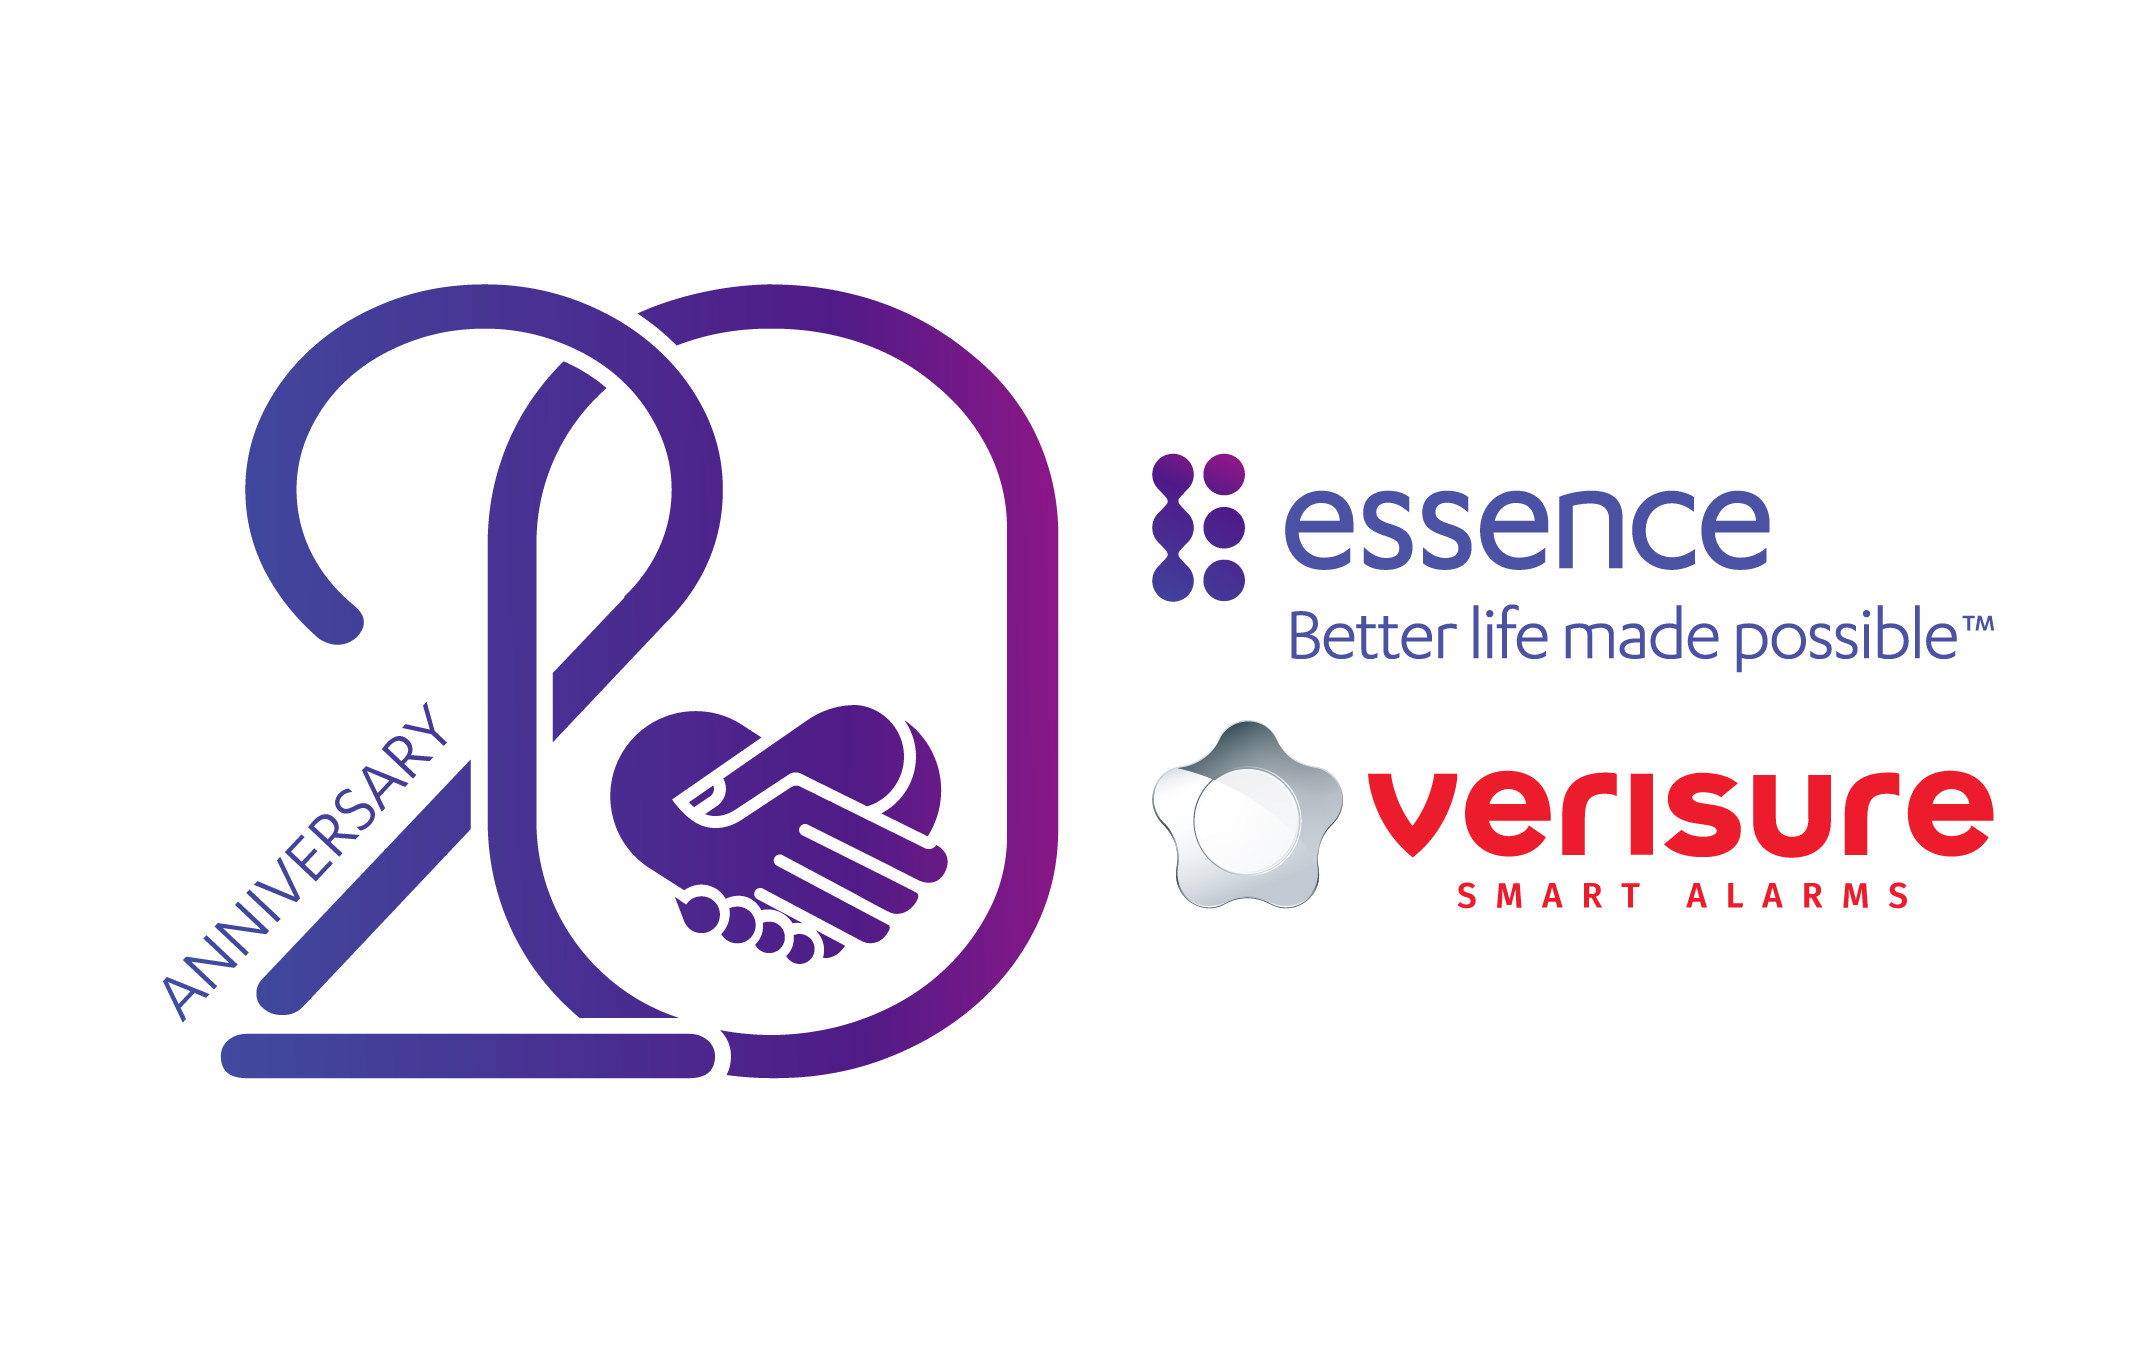 Essence Group and Verisure Mark 20-Year Partnership